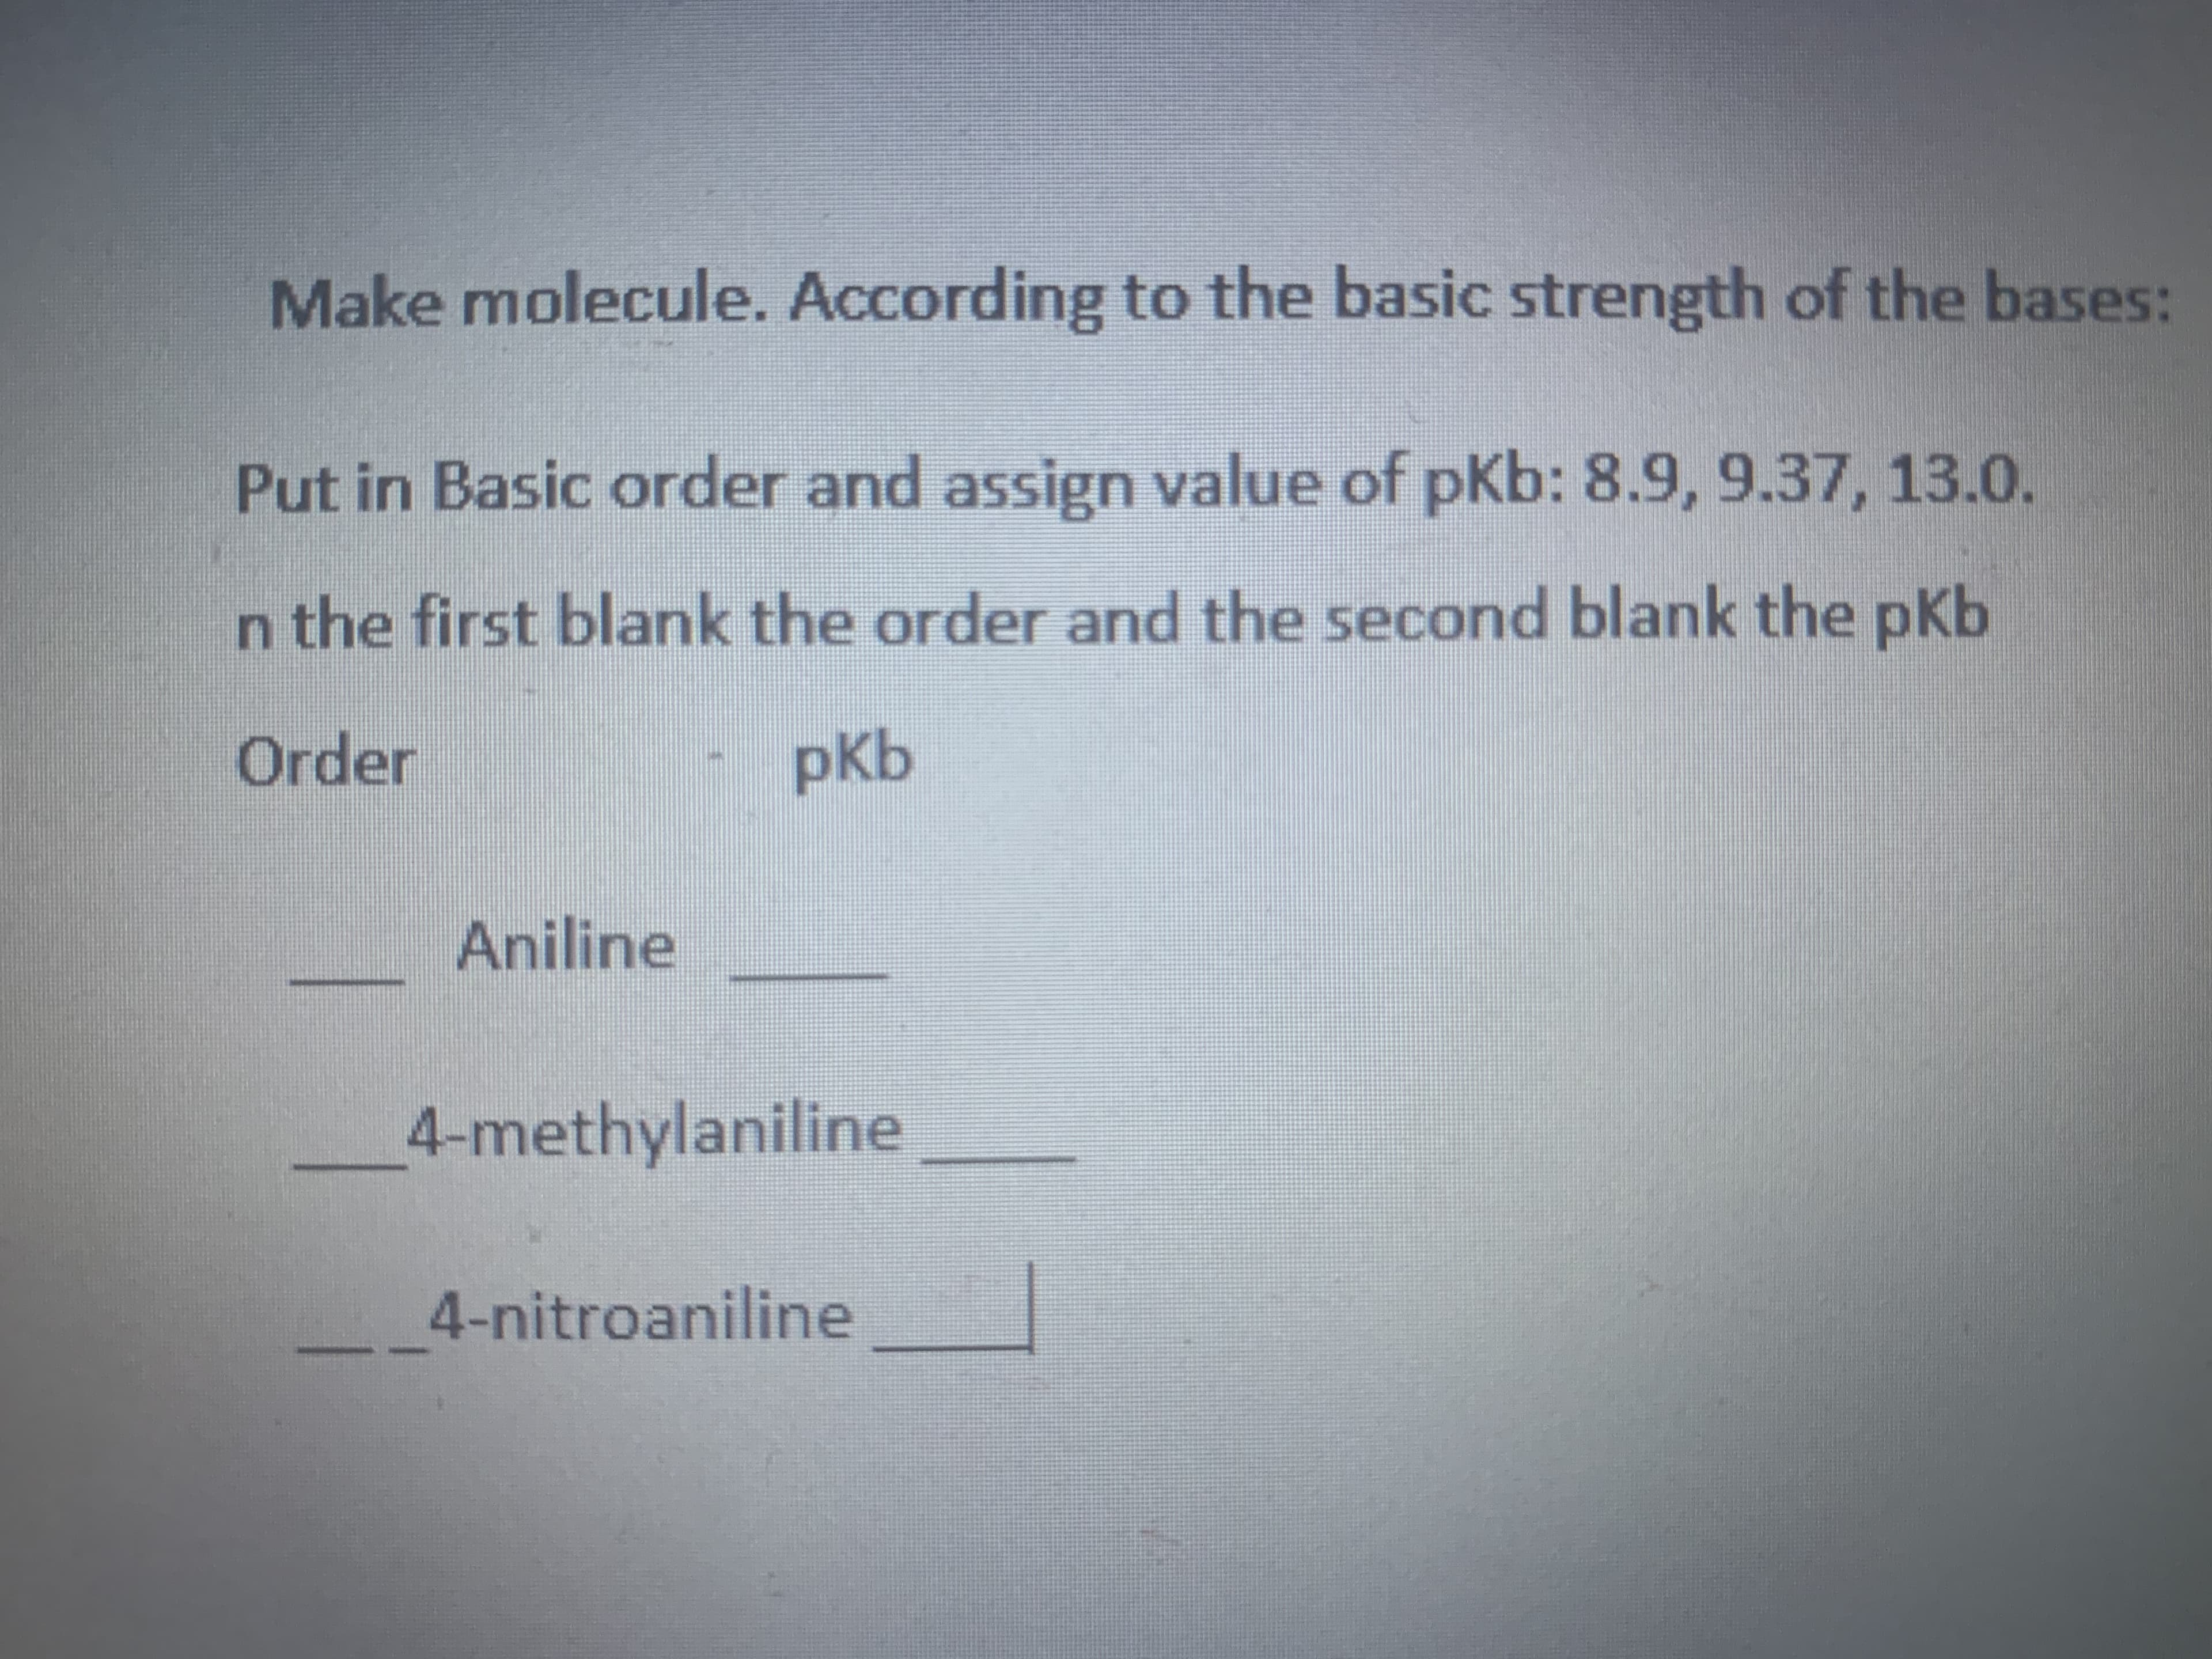 Order
pKb
Aniline
4-methylaniline
4-nitroaniline
